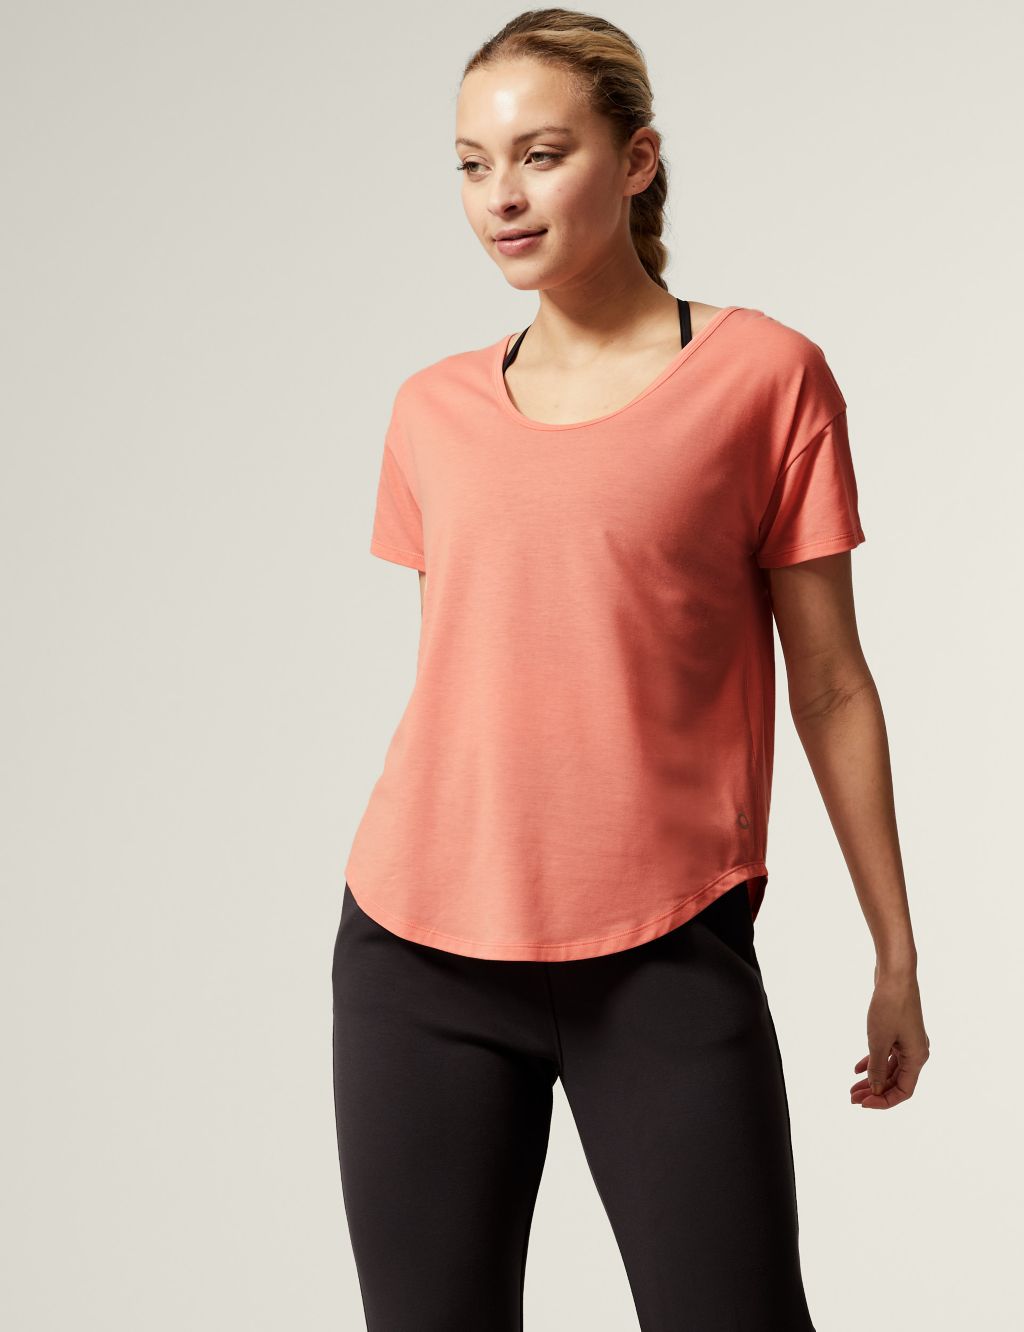 Scoop Neck Cross Back Yoga T-Shirt image 2